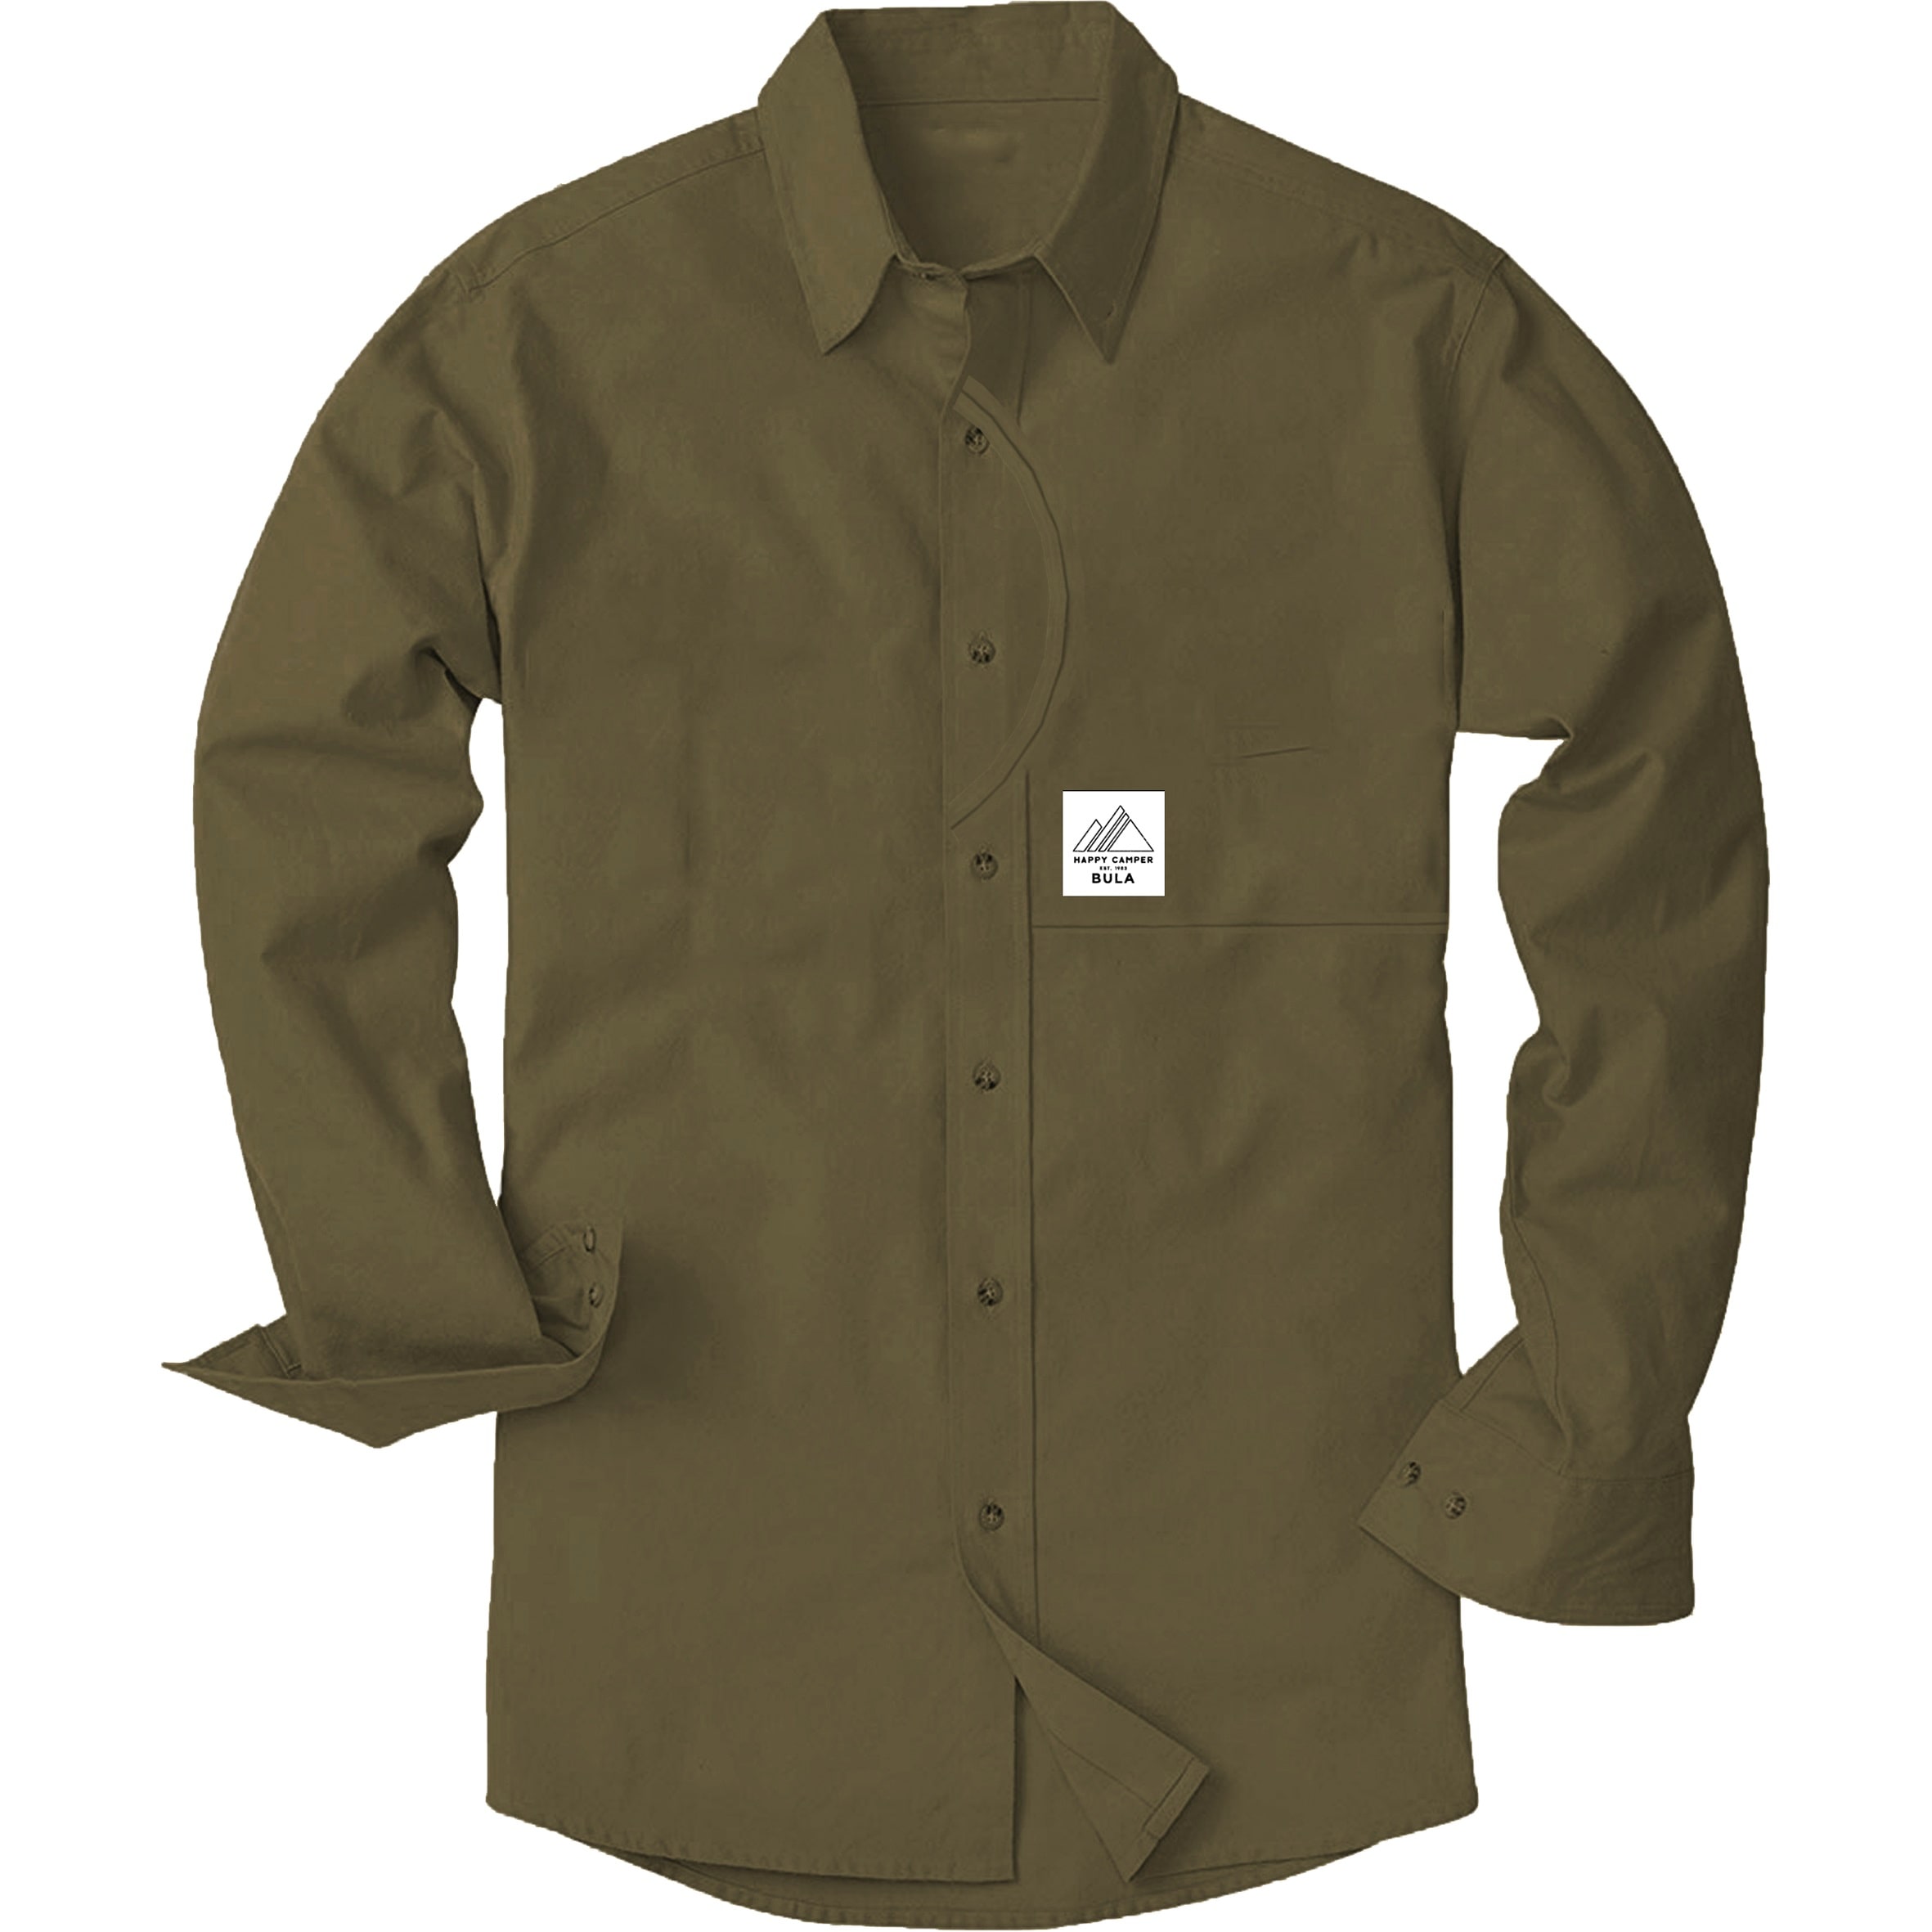 Buy Bula Camper Longsleeve Shirt Men´s from Outnorth